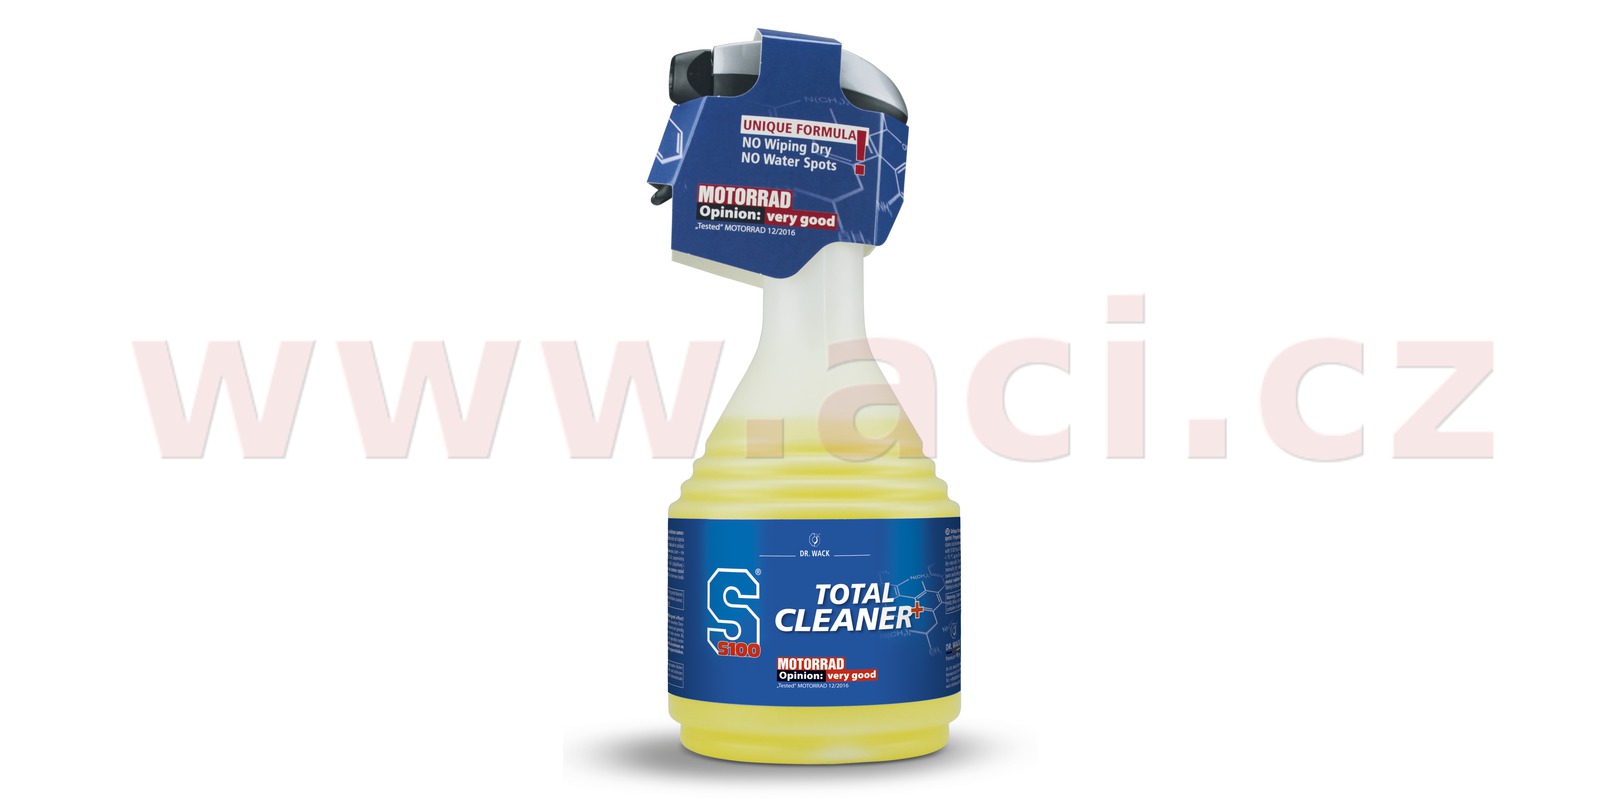 Obrázek produktu S100 čistič motocyklu - MotorcycleTotal Cleaner 750 ml 3400